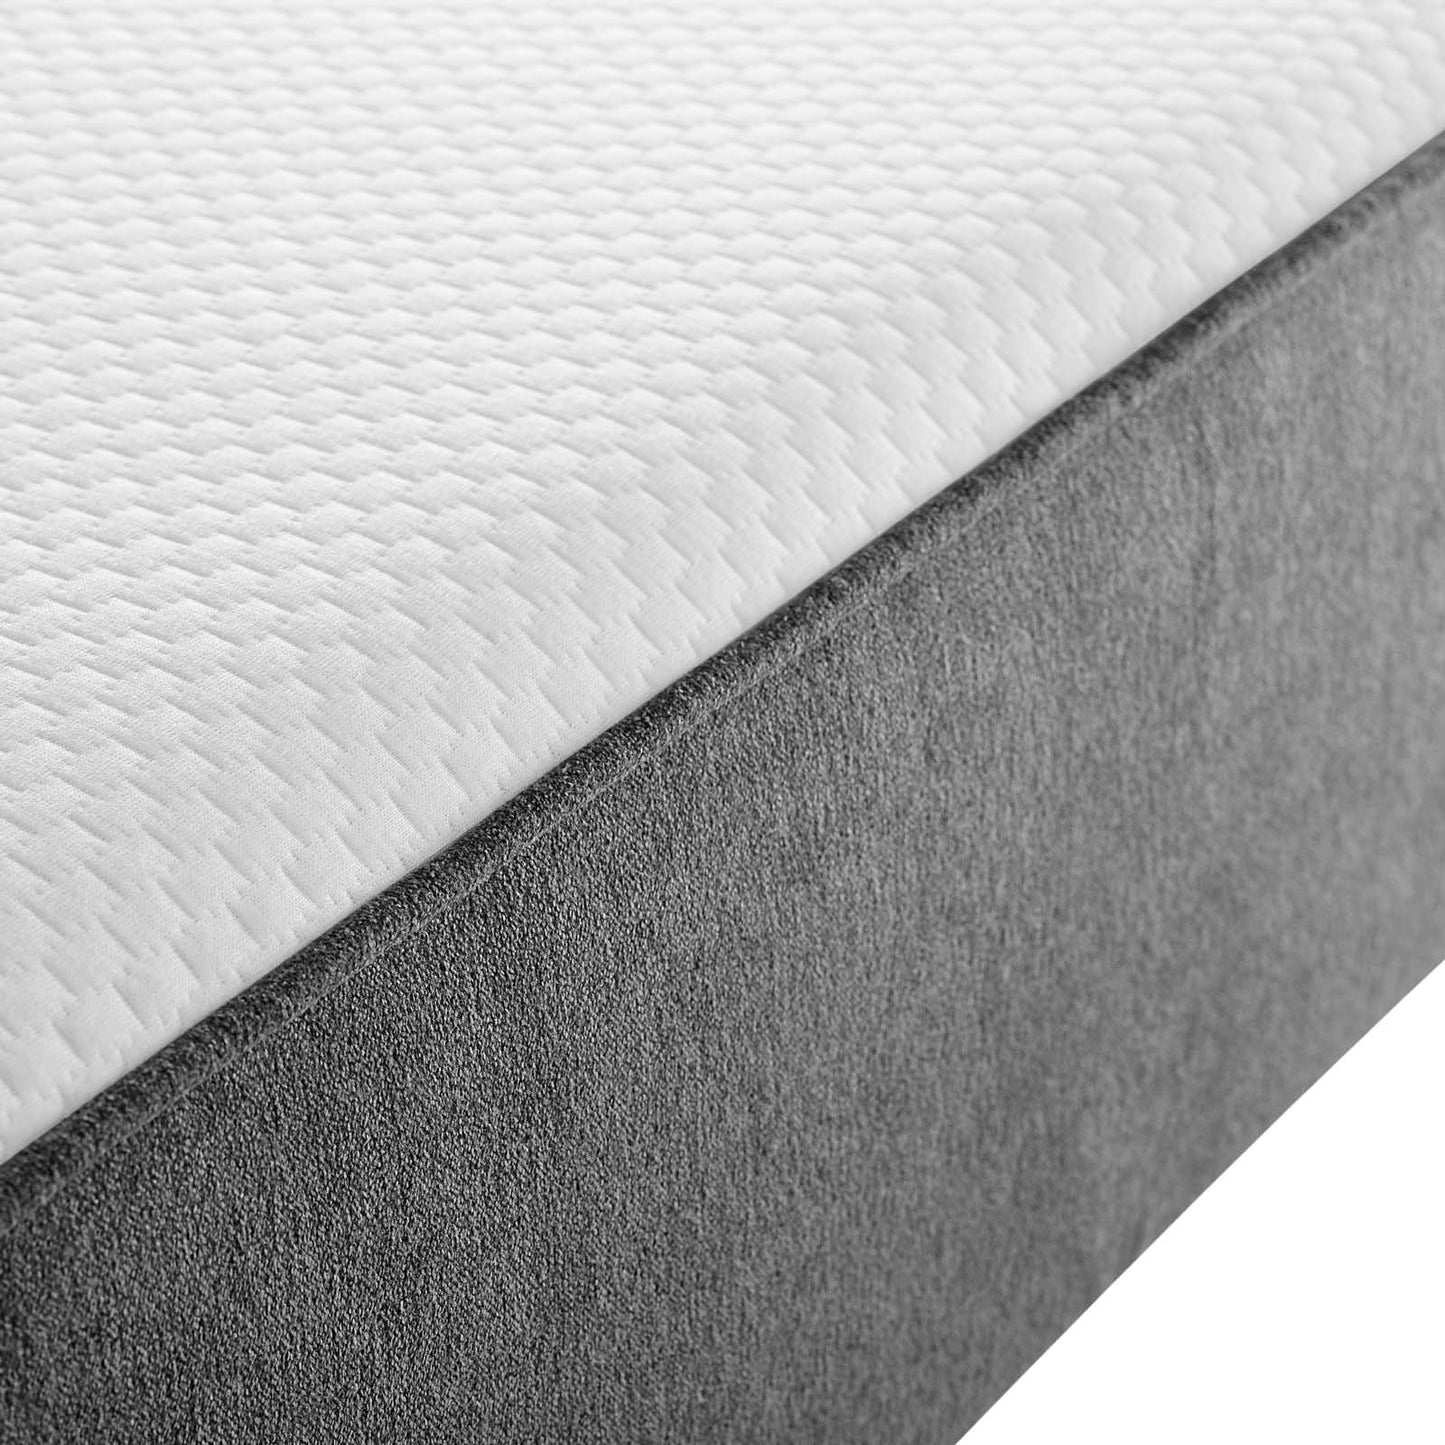 Flexhaven 10" Queen Memory mattress  FLE-770-Q